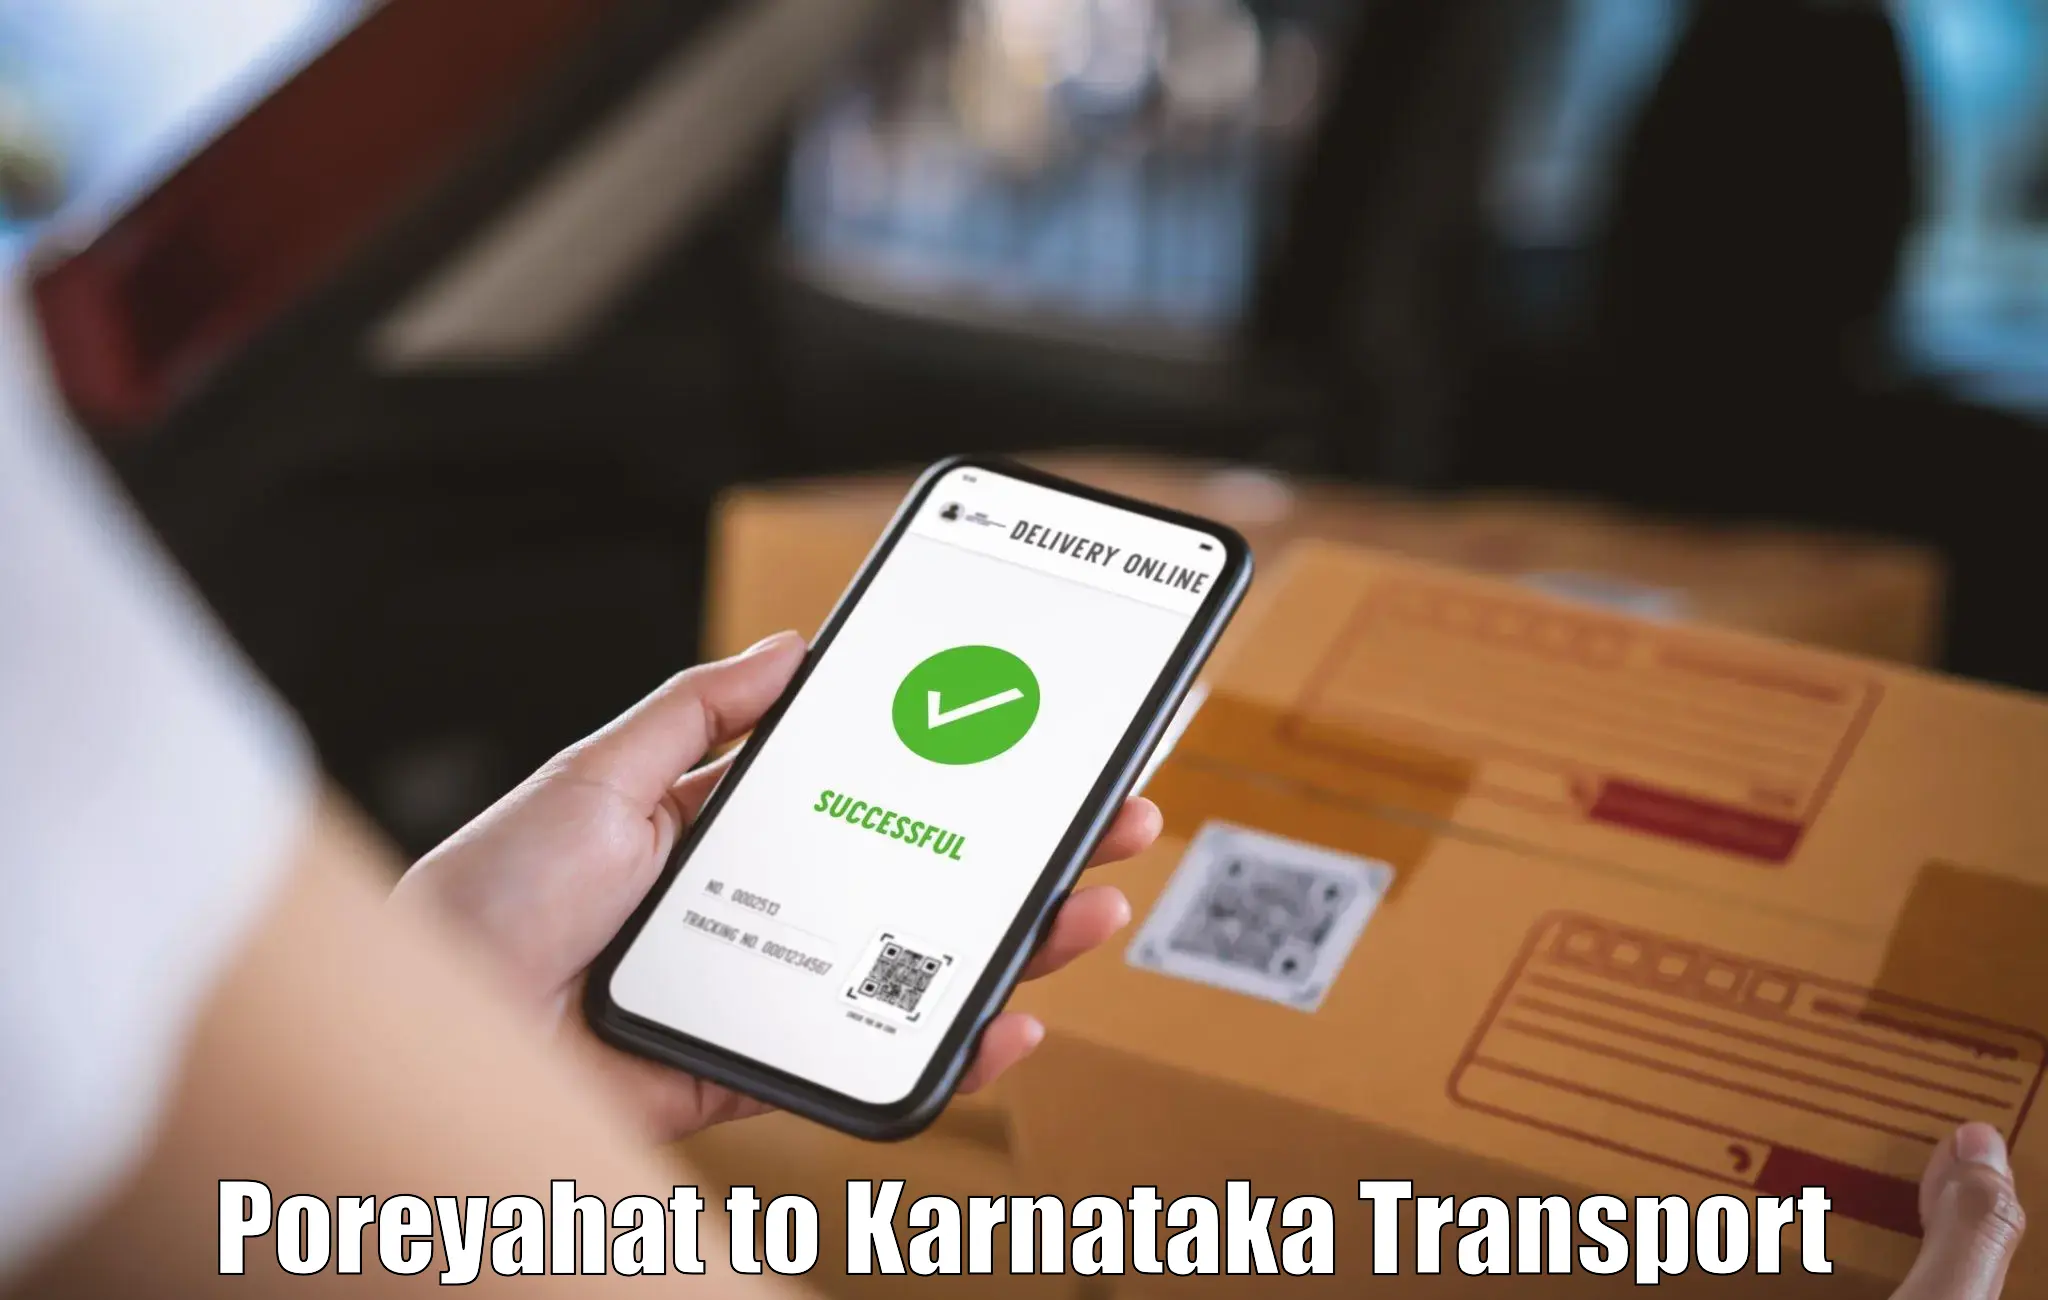 Daily transport service Poreyahat to Maramanahalli